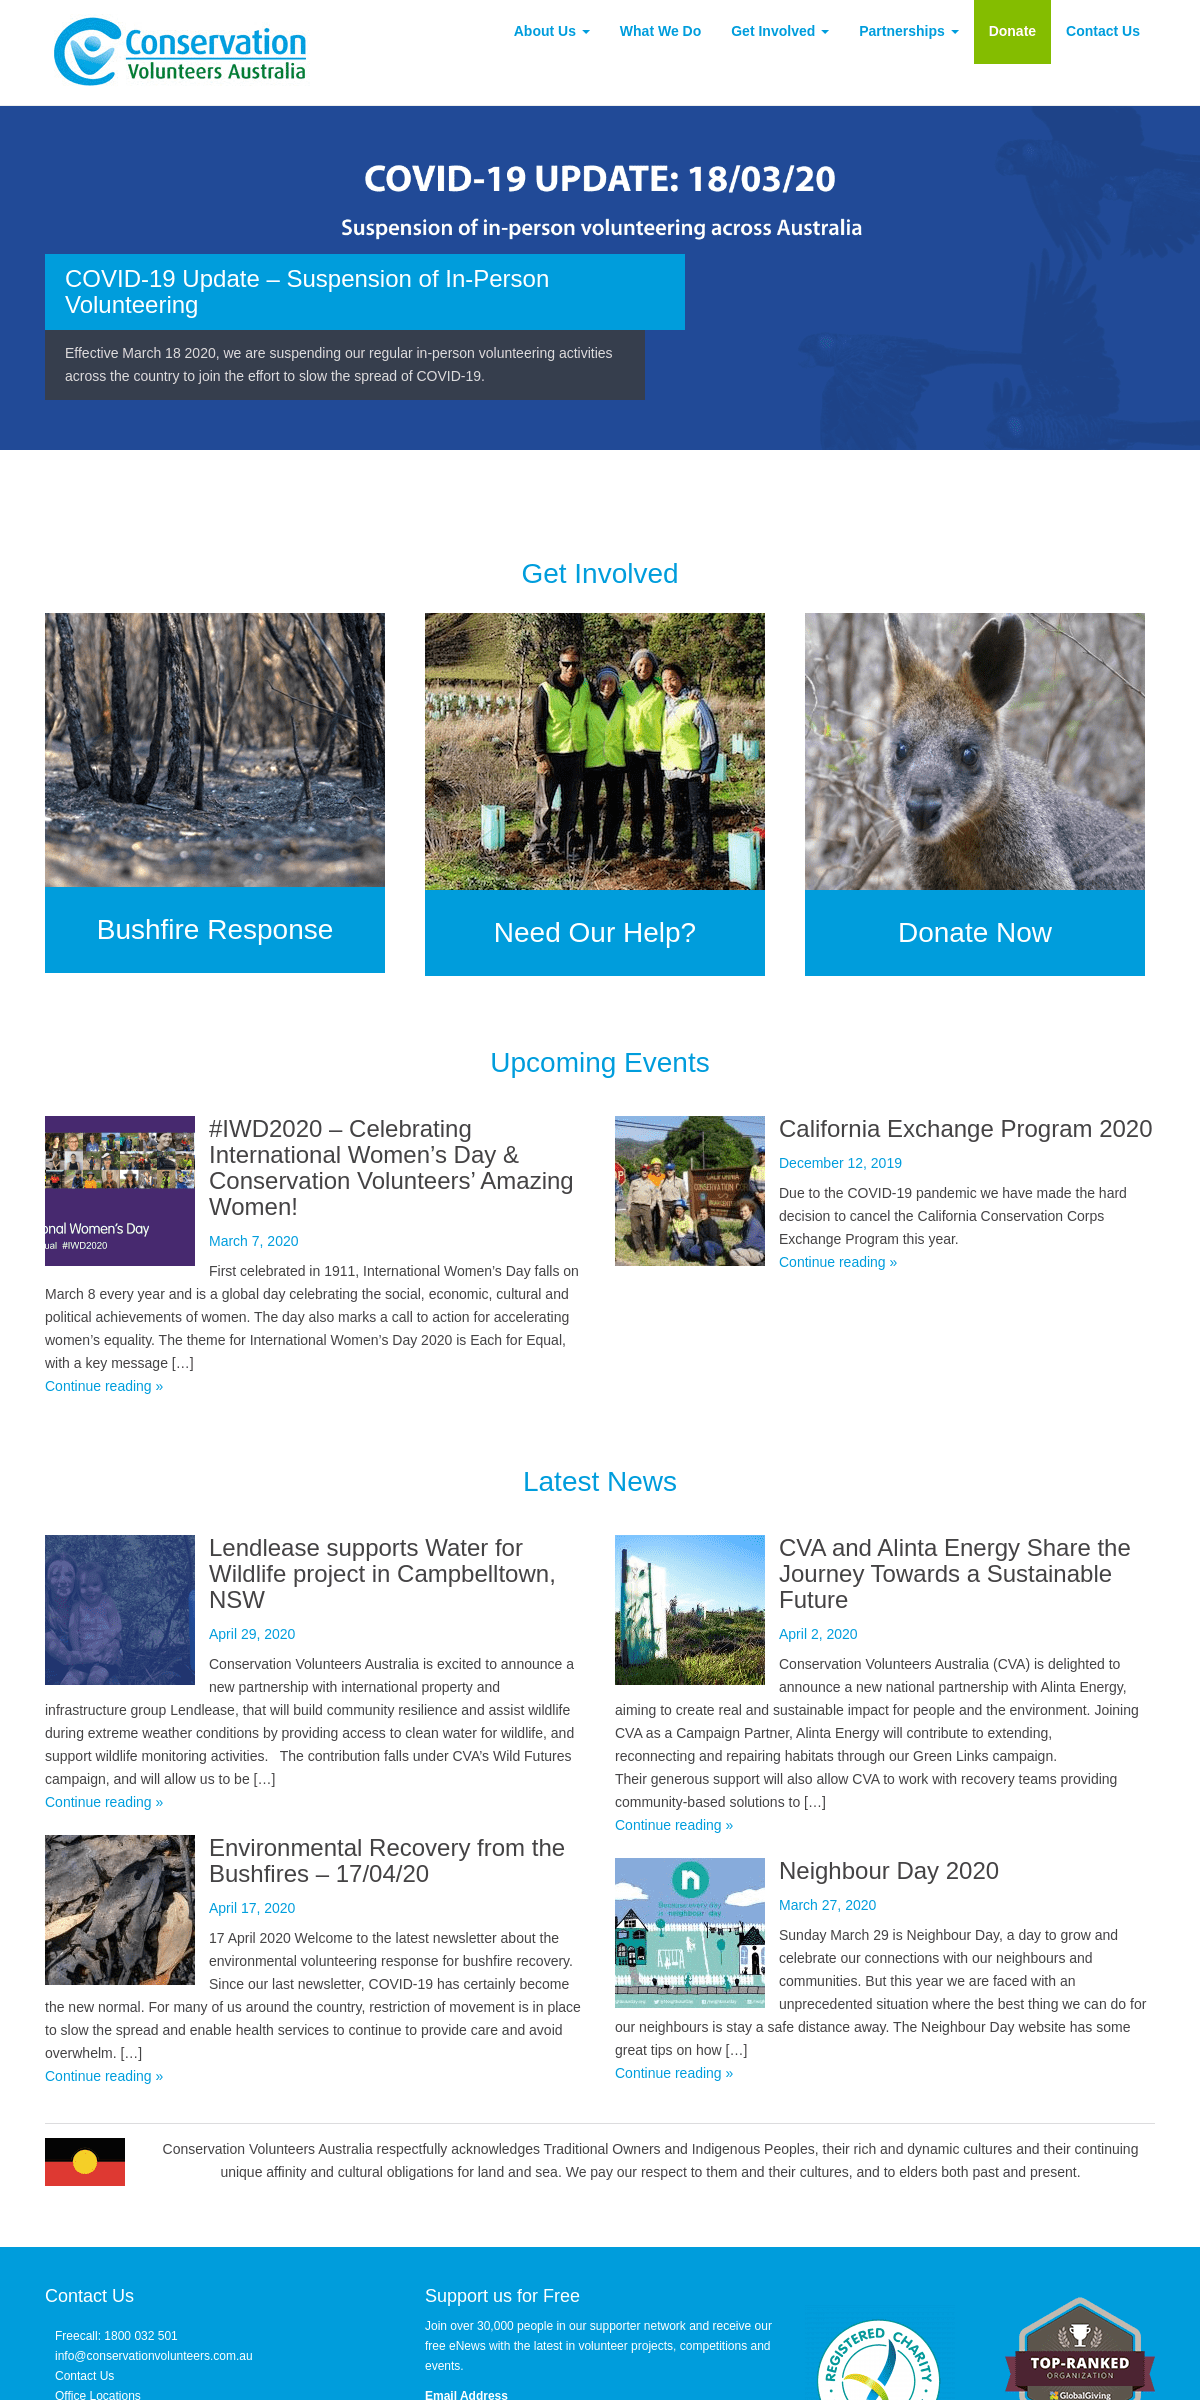 A complete backup of conservationvolunteers.com.au